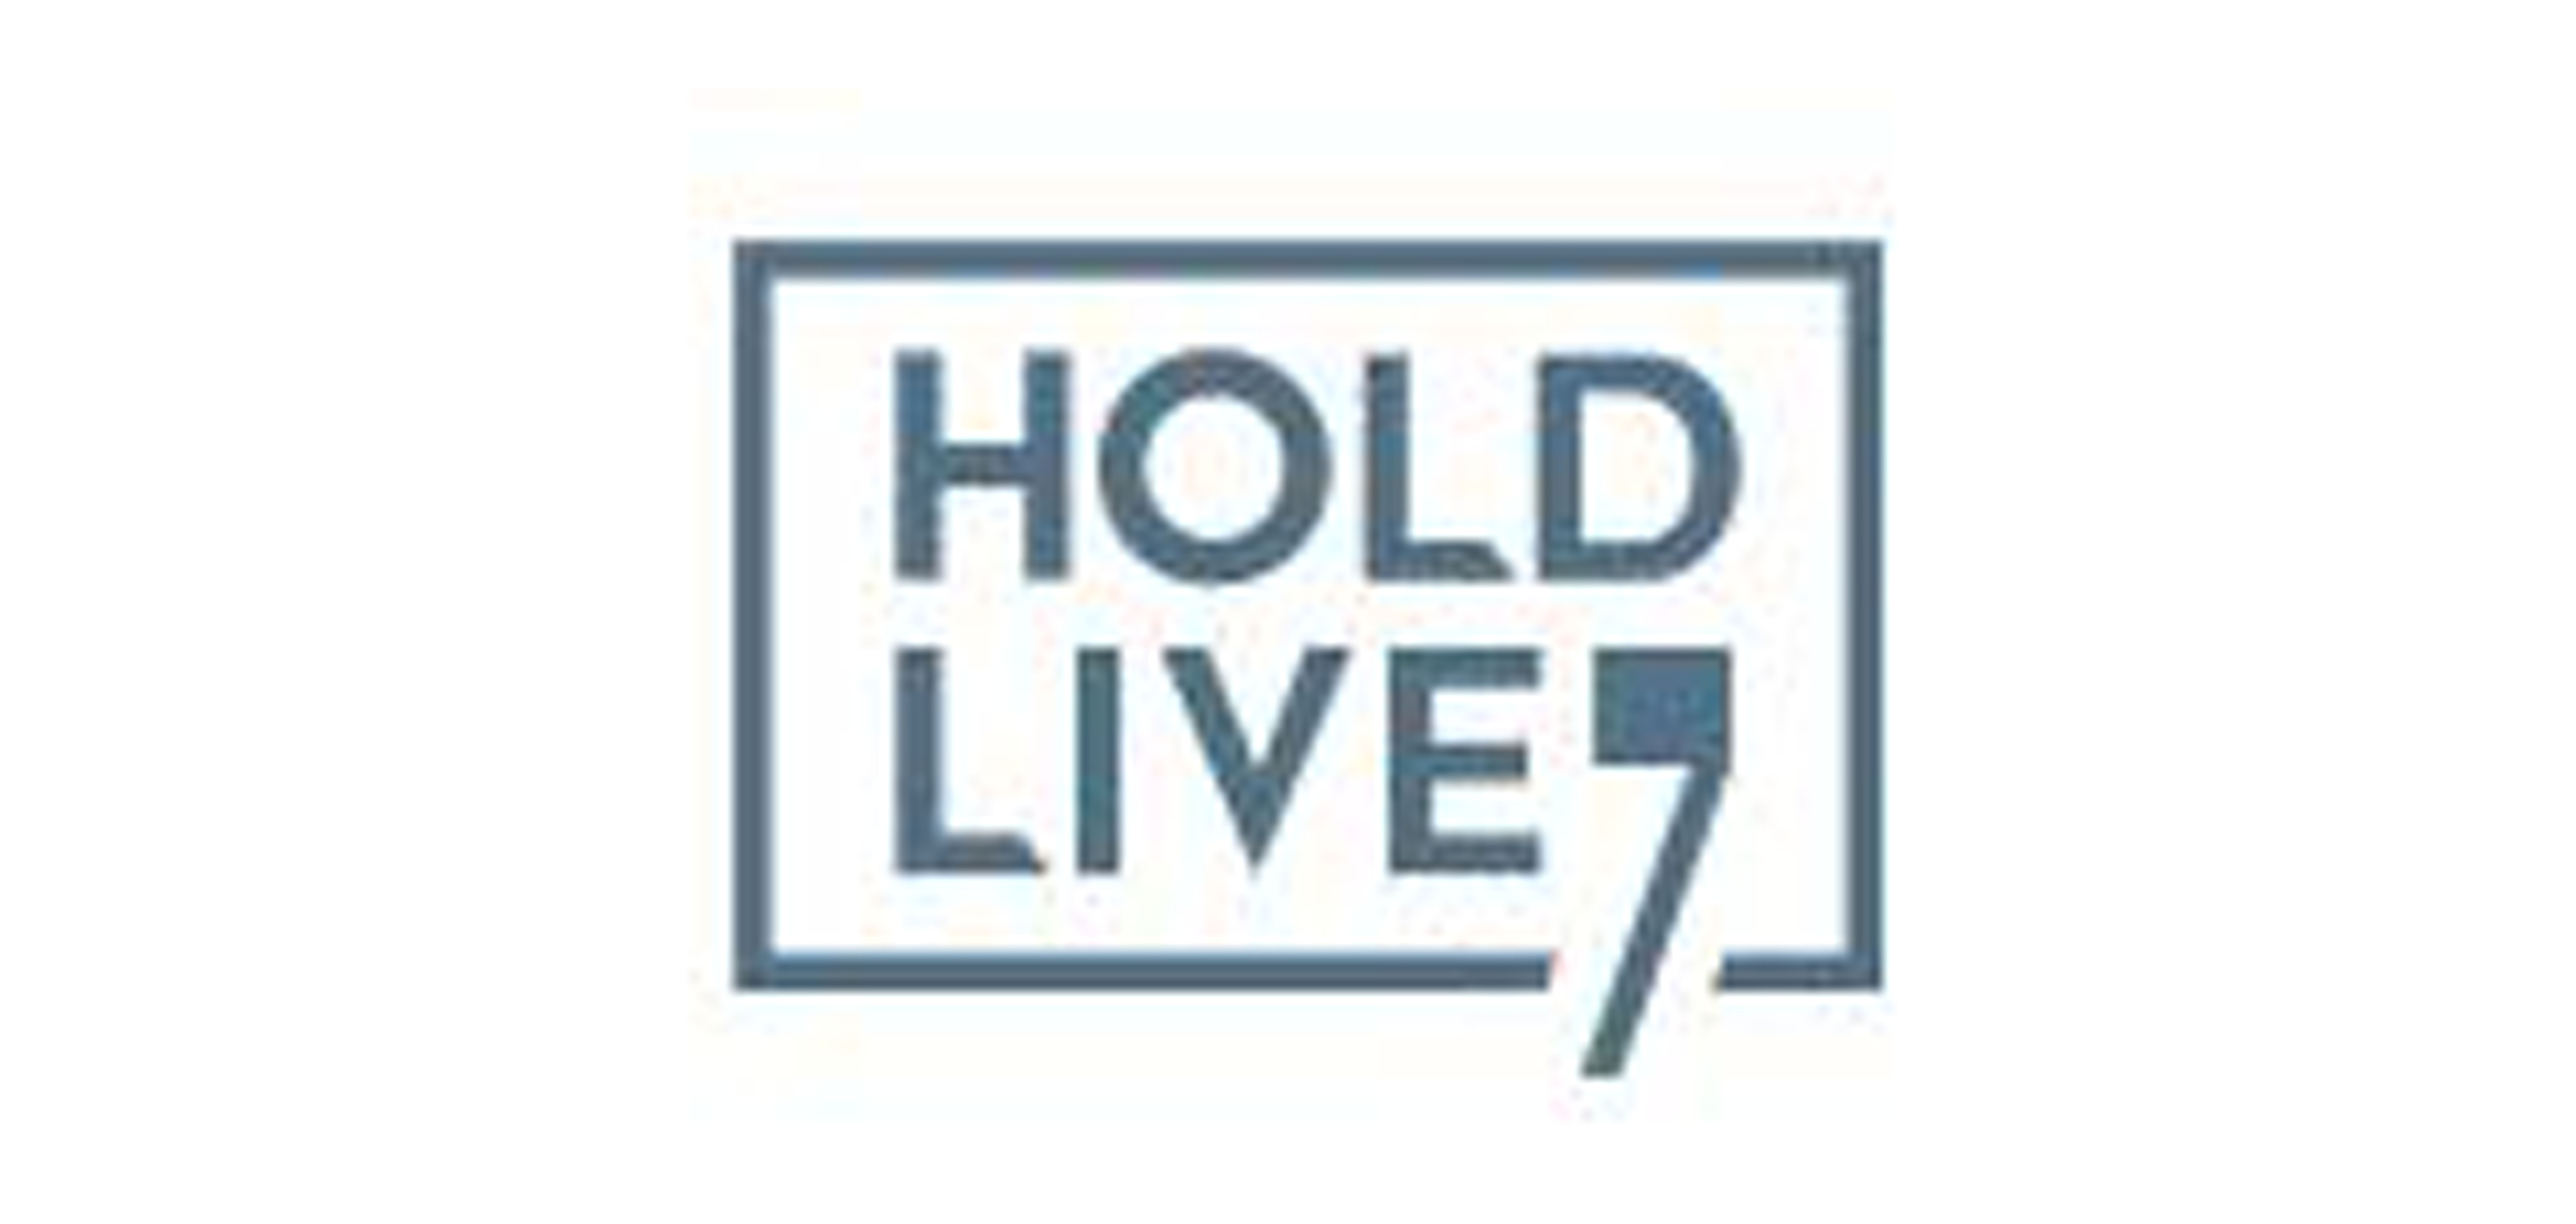 Hold live是什么牌子_Hold live品牌怎么样?